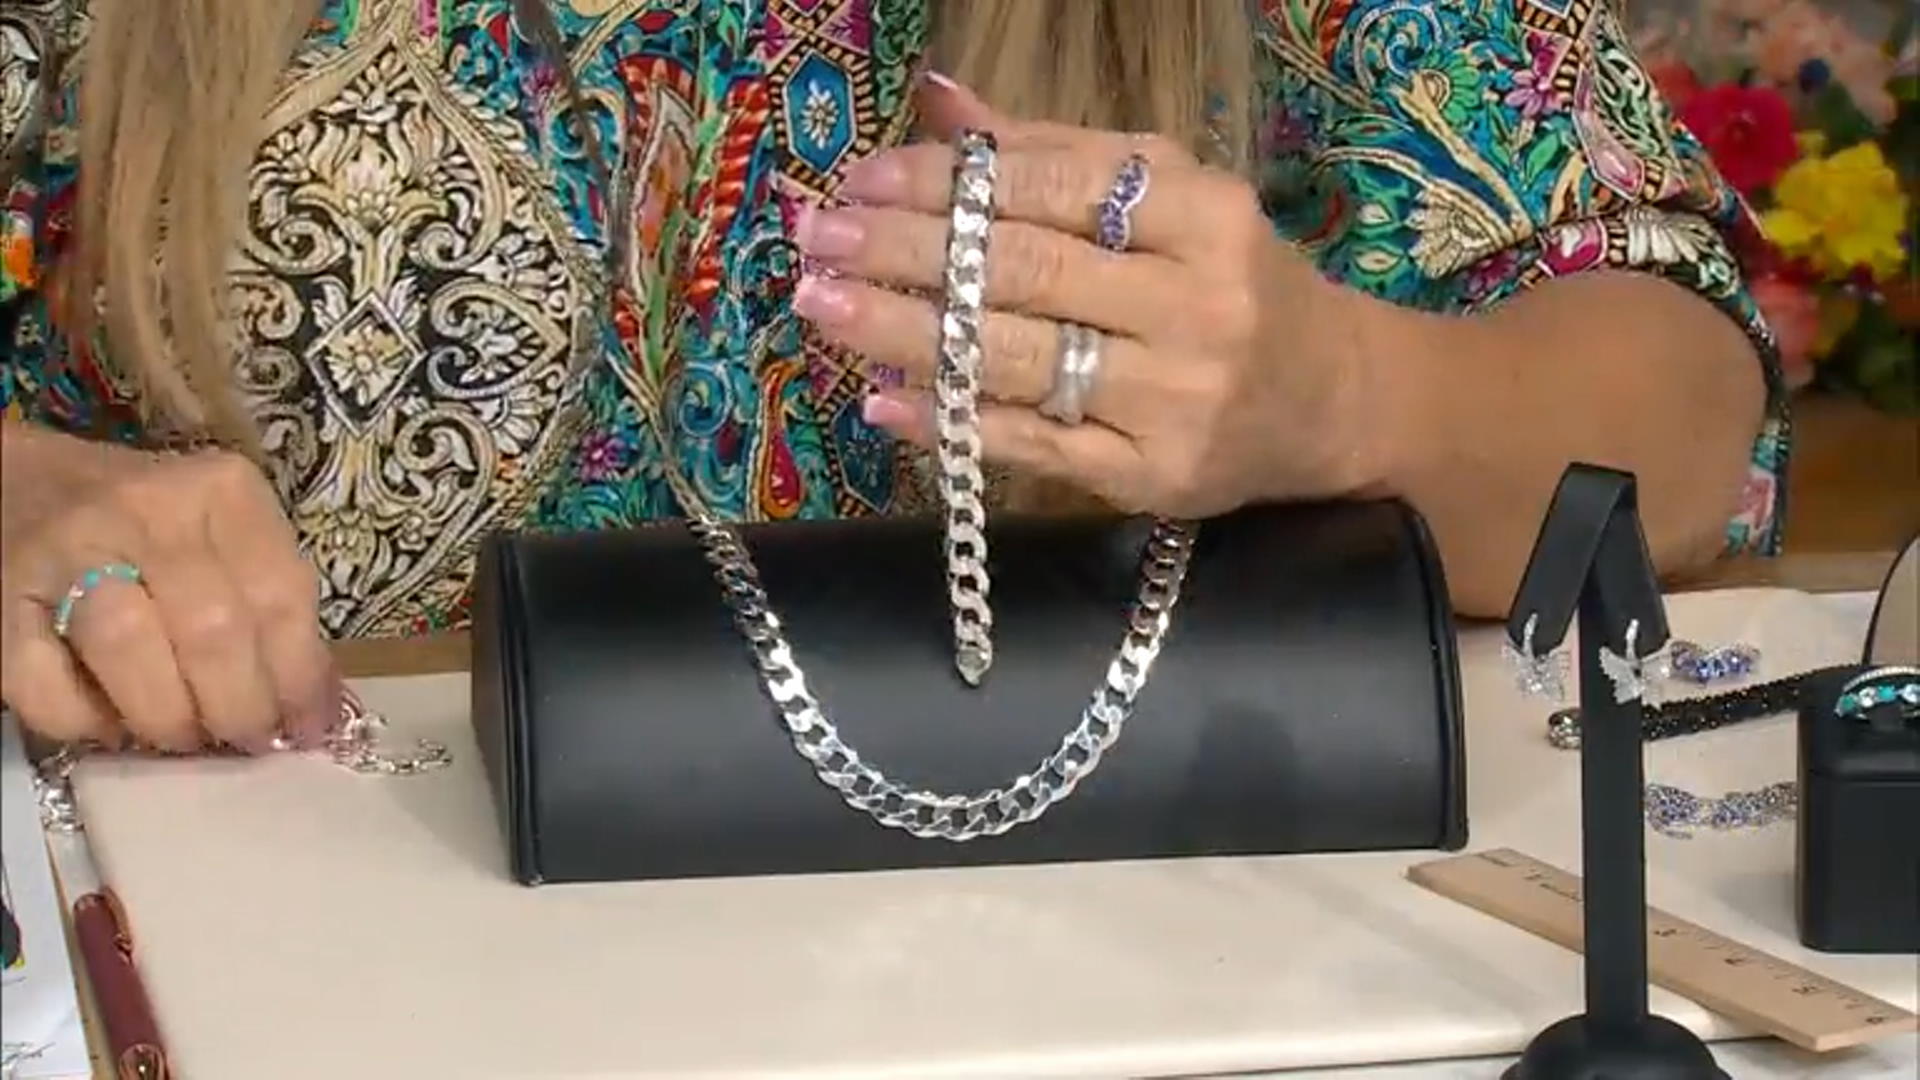 Sterling Silver 10mm Flat Curb Link Bracelet Video Thumbnail